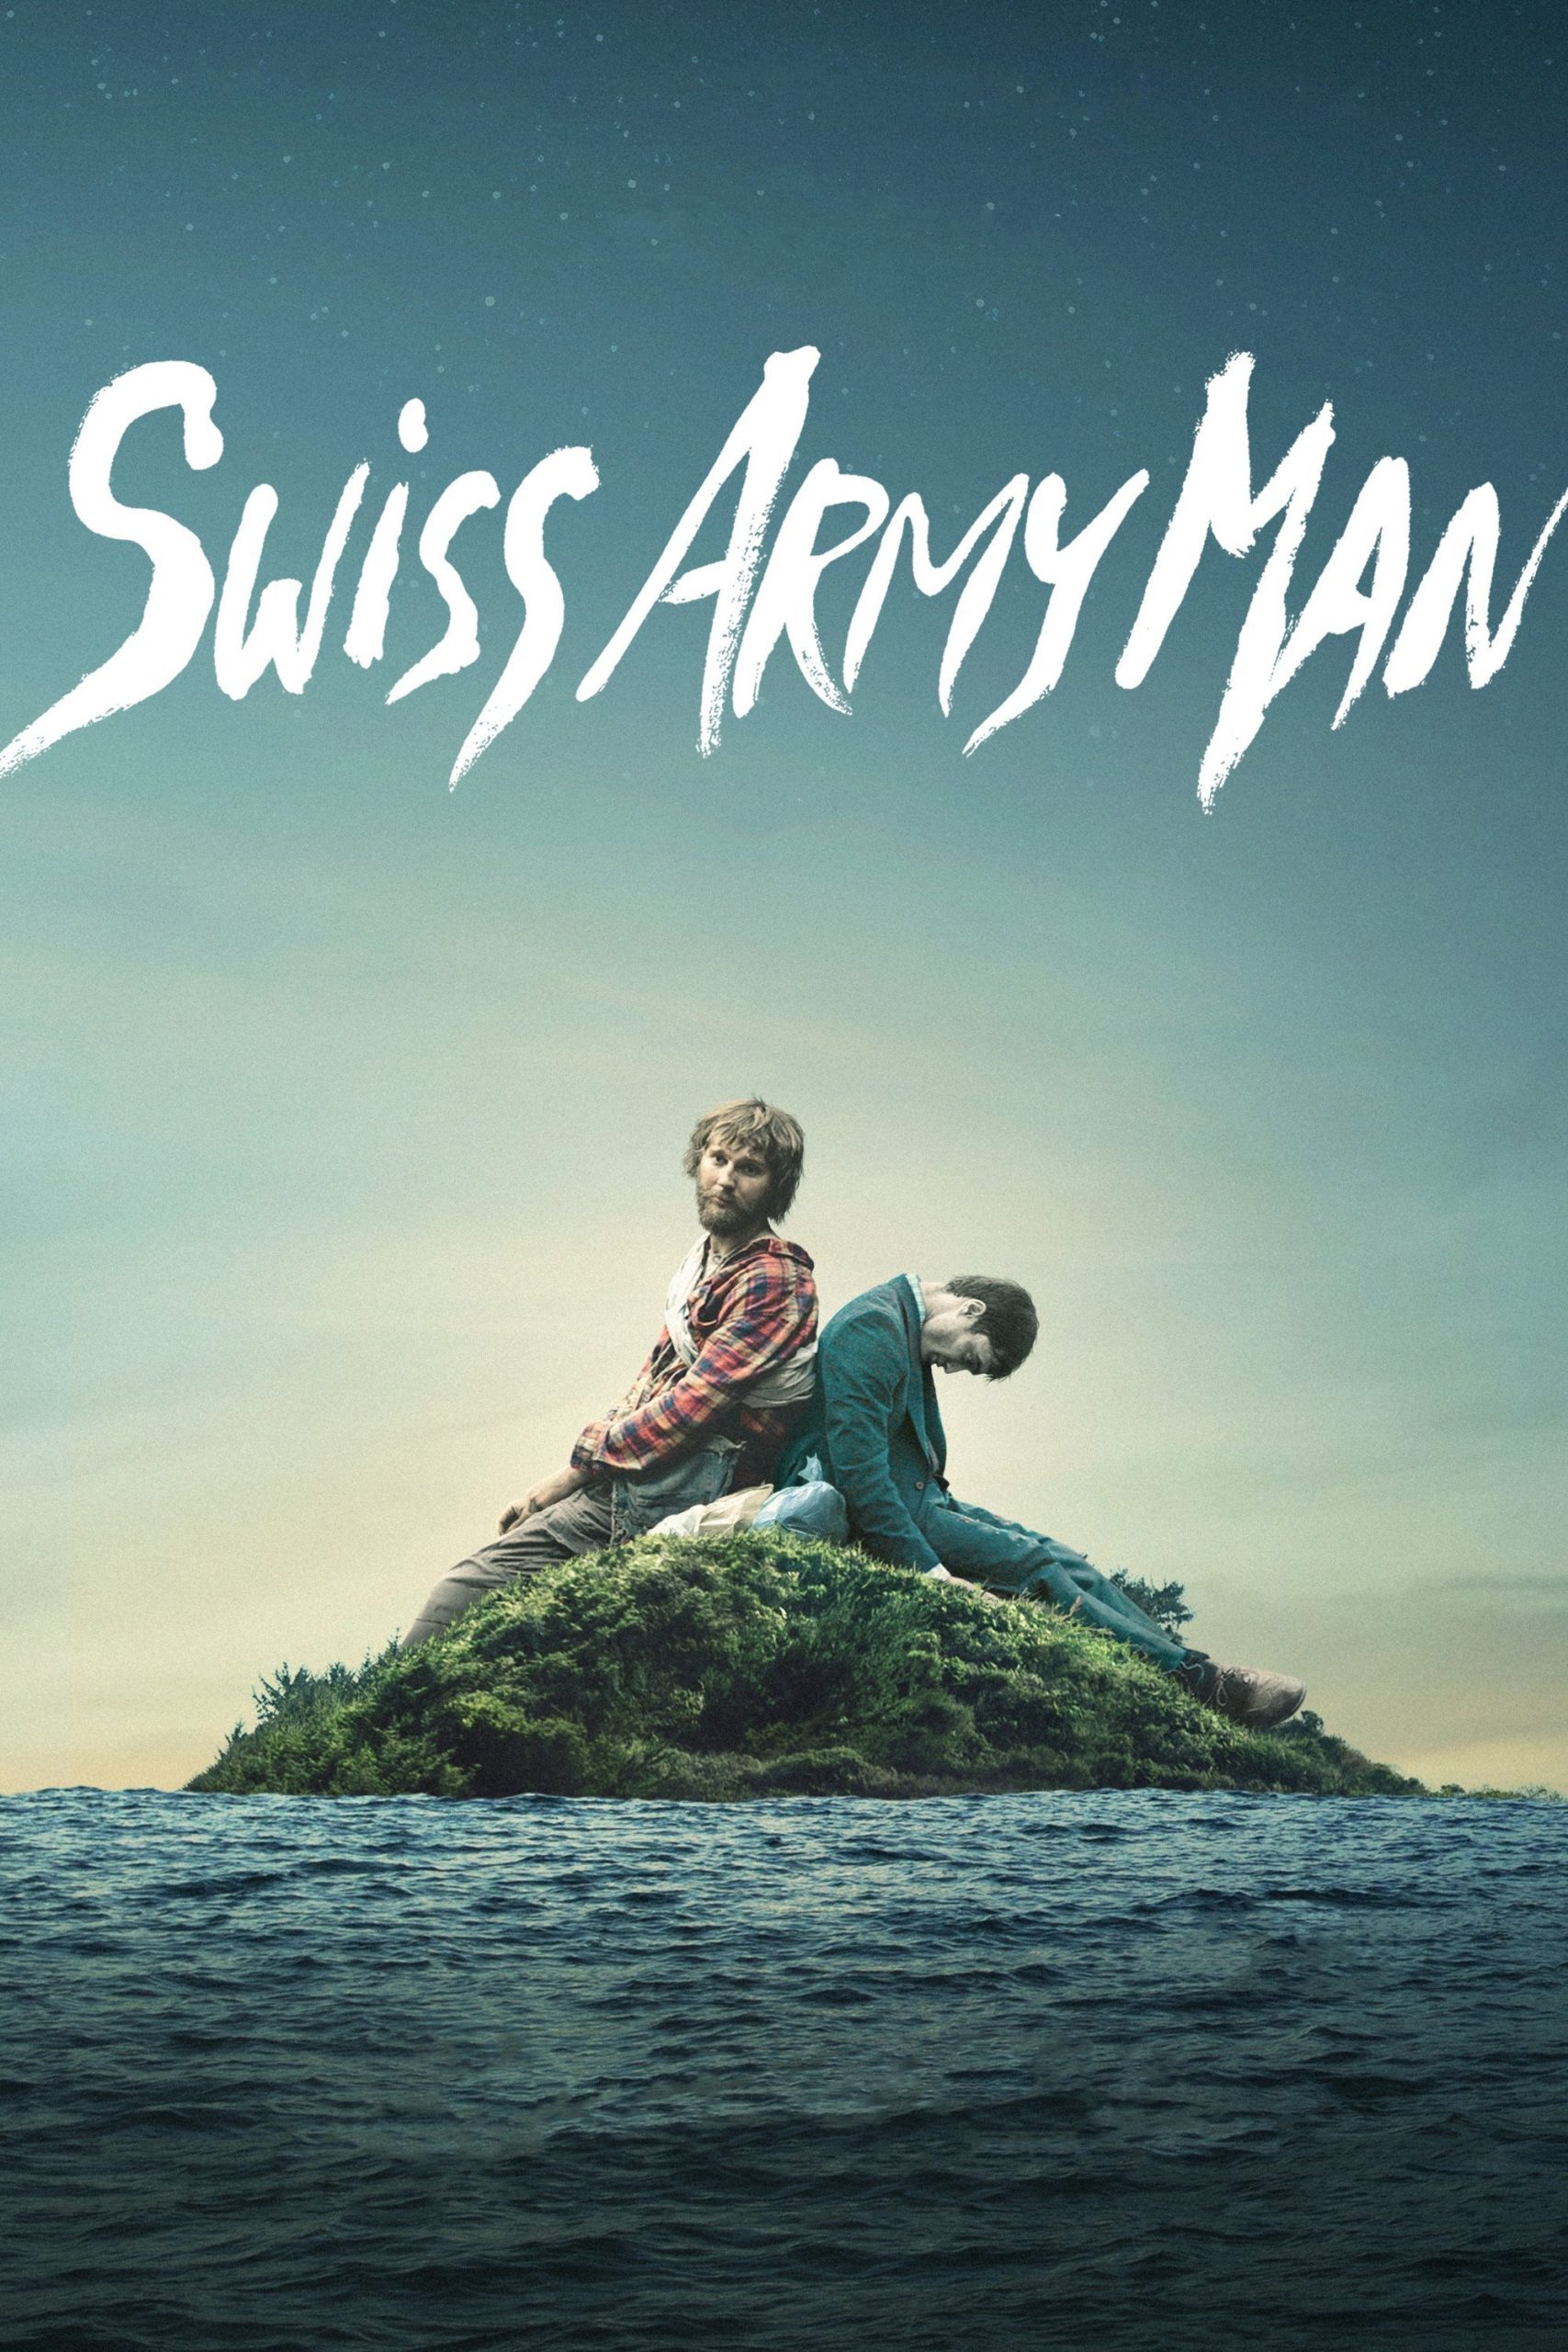 Poster de la película "Swiss Army Man"